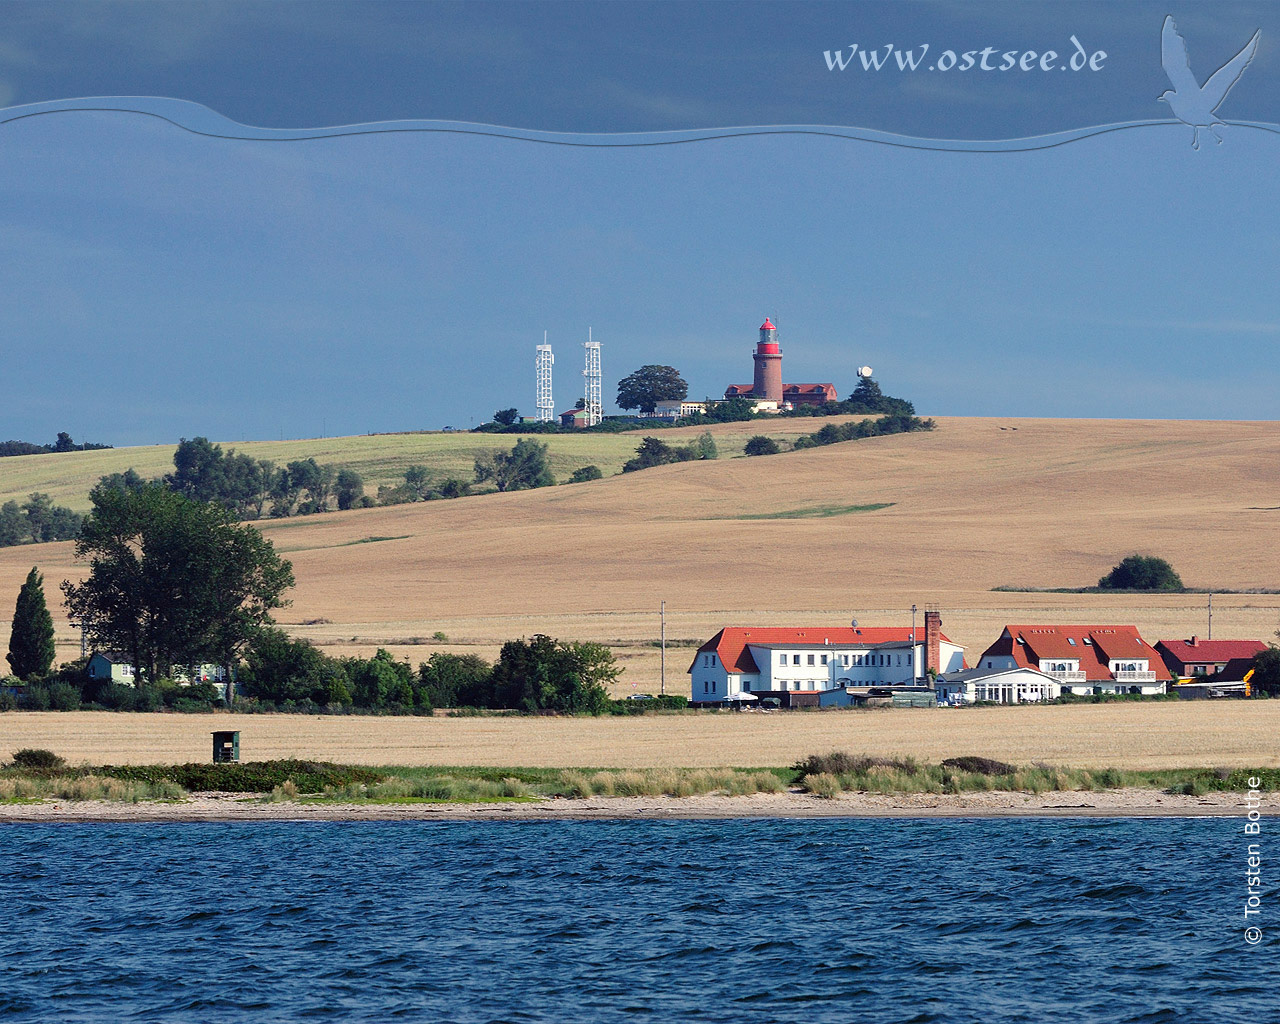 Hintergrundbild: Leuchtturm an der Ostsee